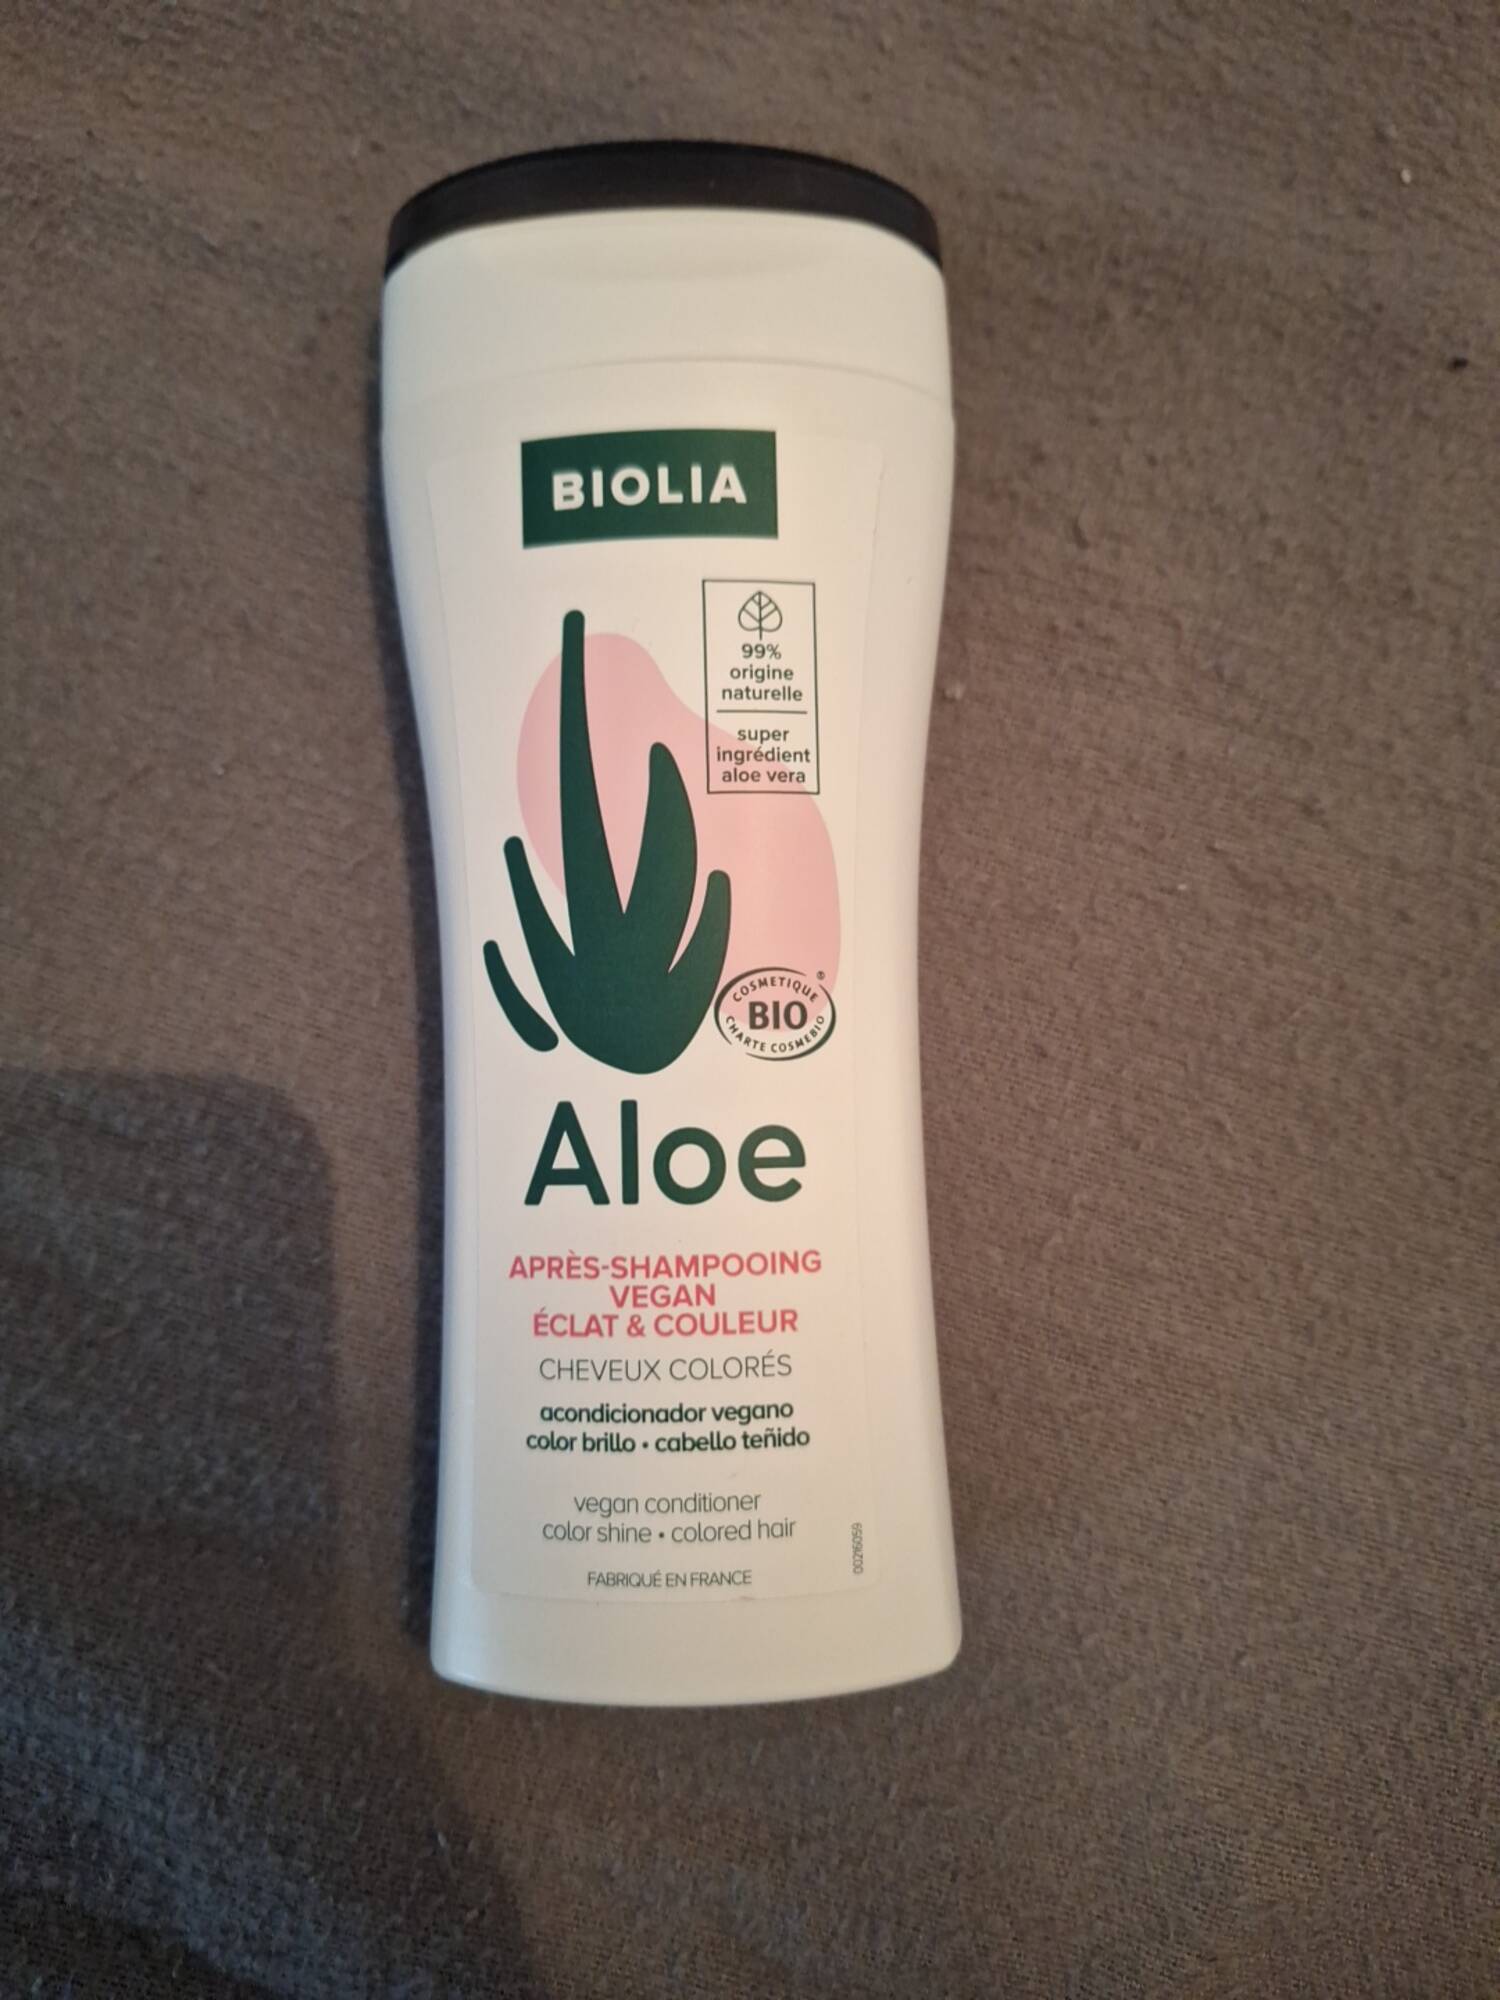 BIOLIA - Aloe - Après-shampooing vegan